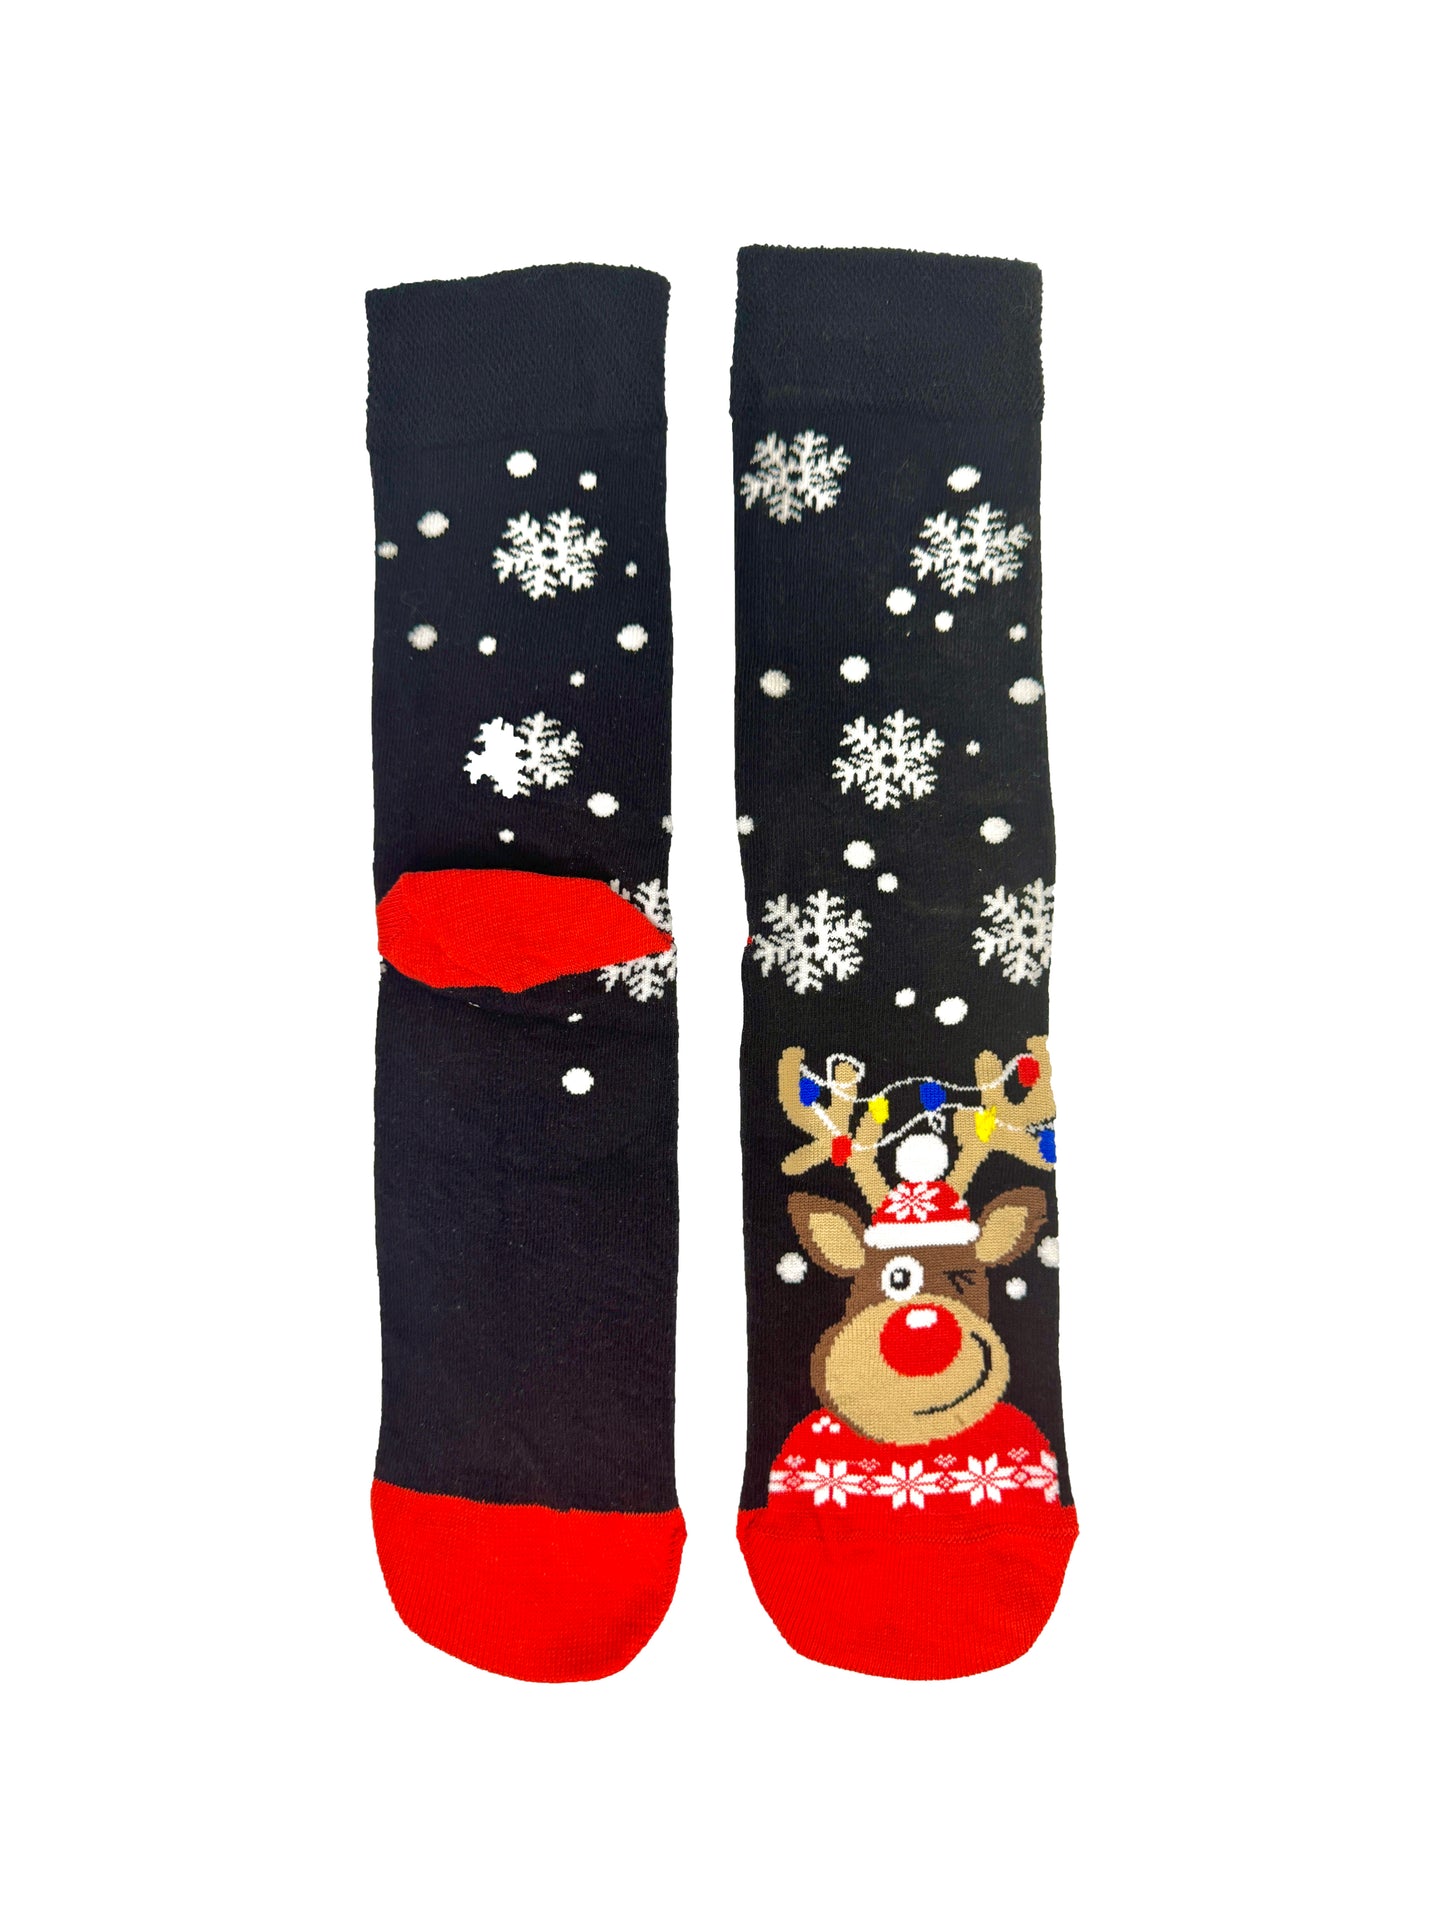 Snow Globe Reindeer Christmas Socks